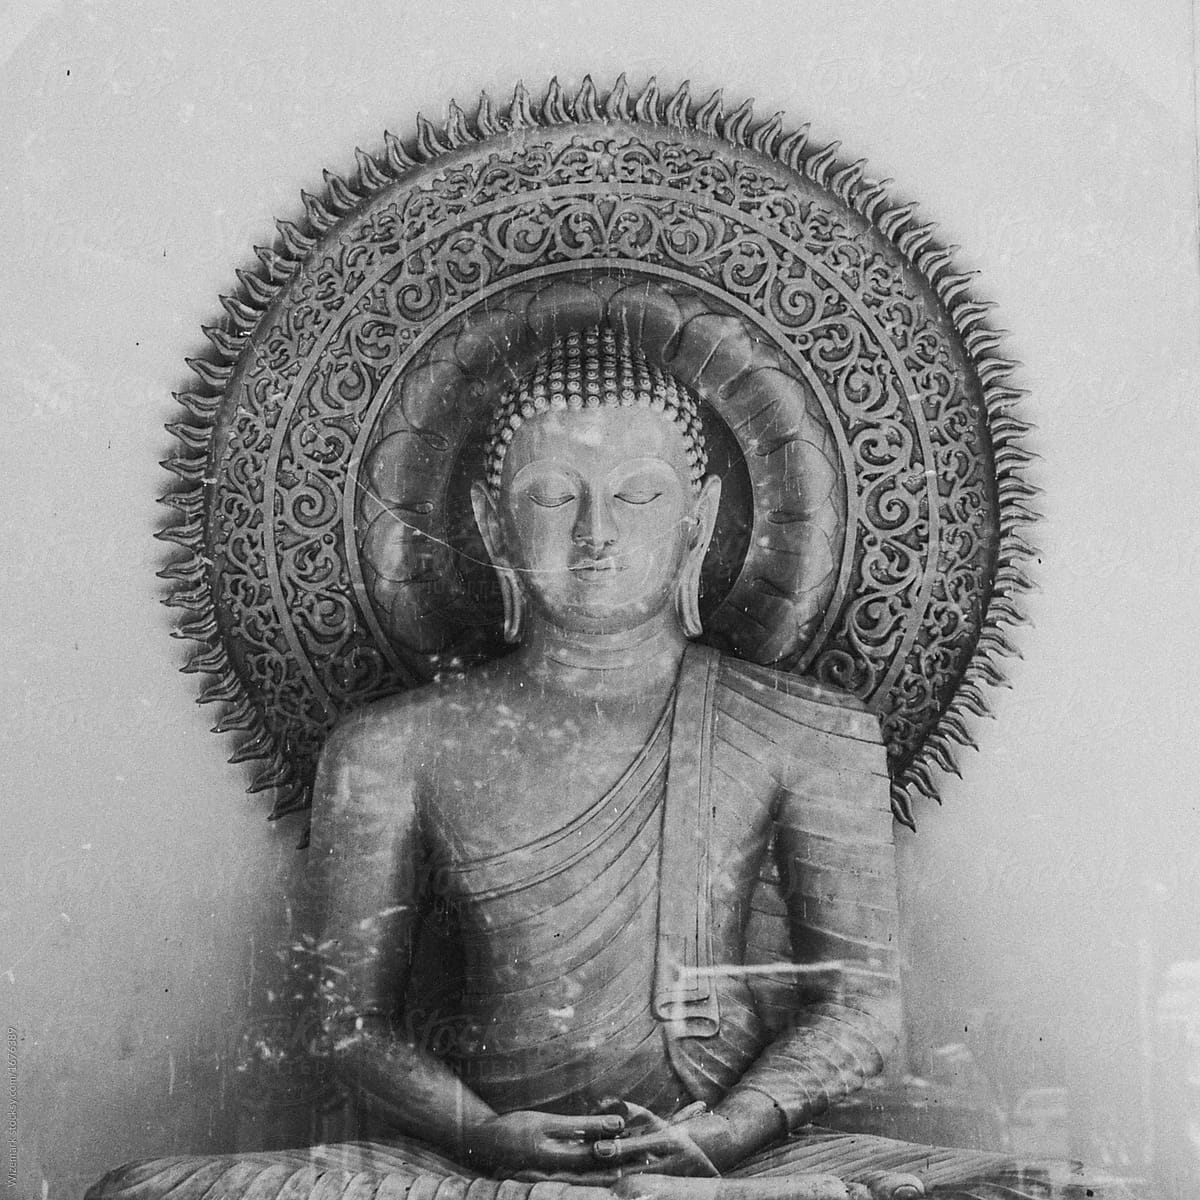 black and white, monochrome sitting Buddha sculpture